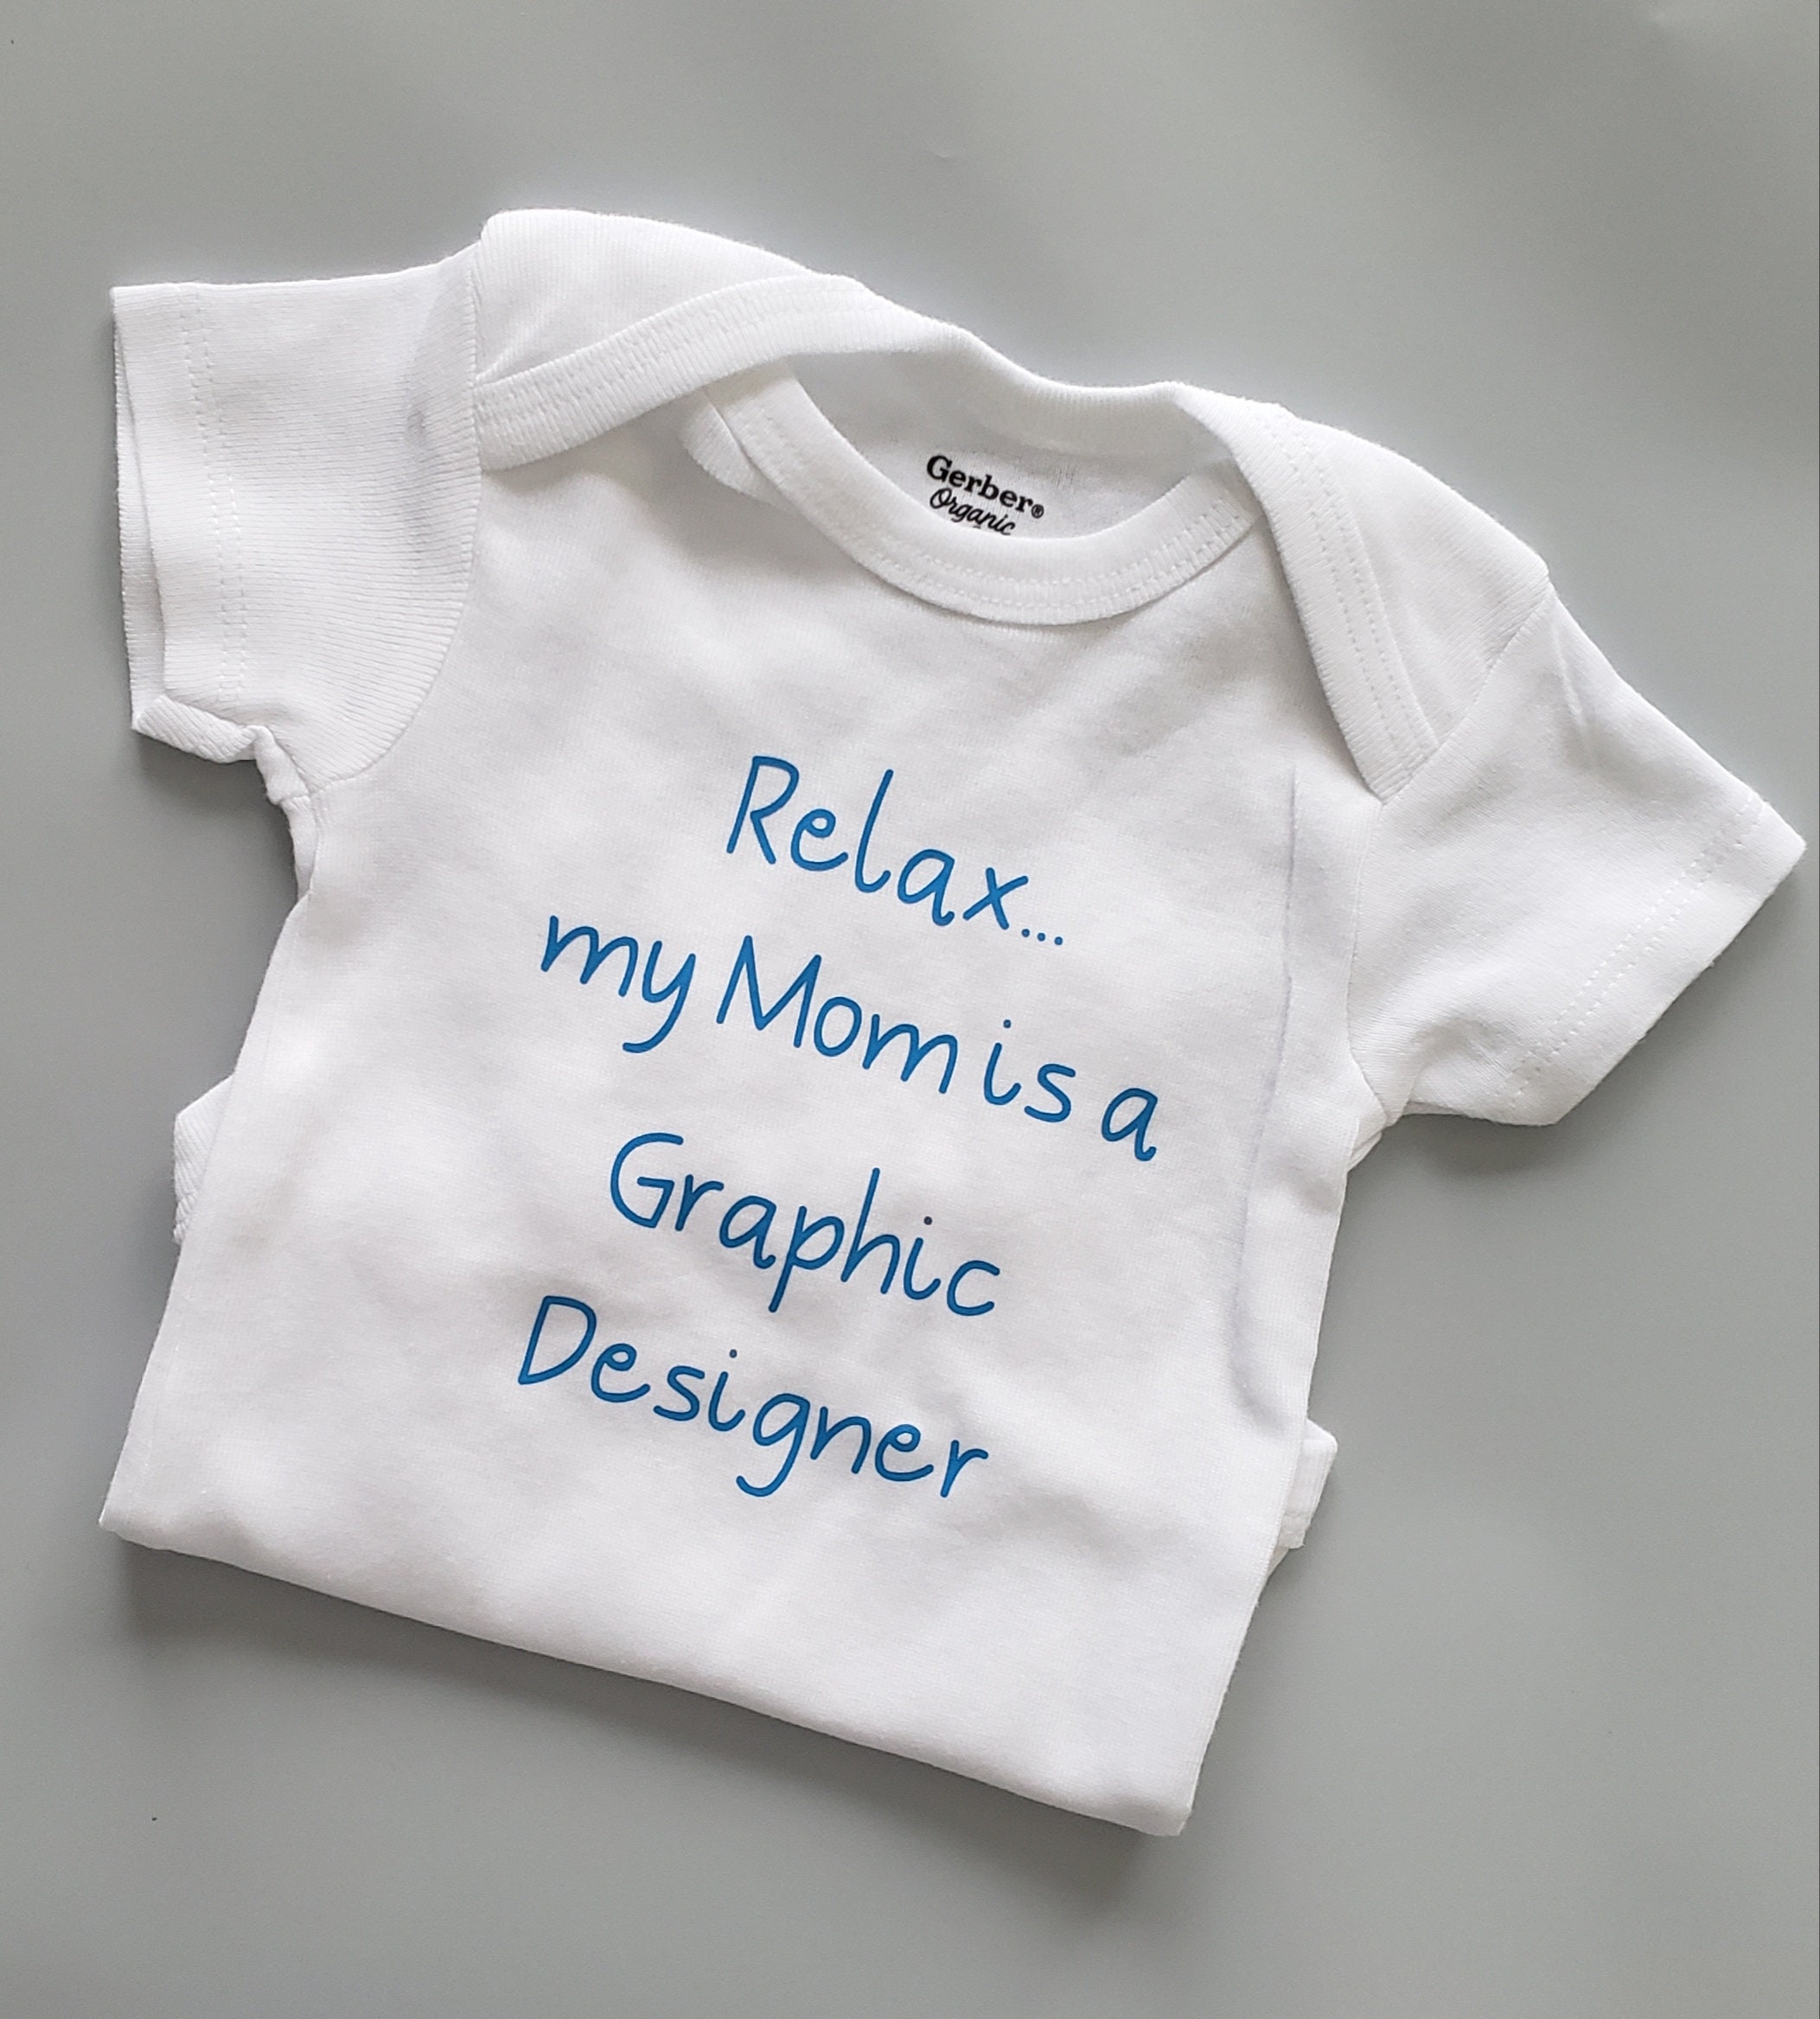 Designer Baby Clothes 